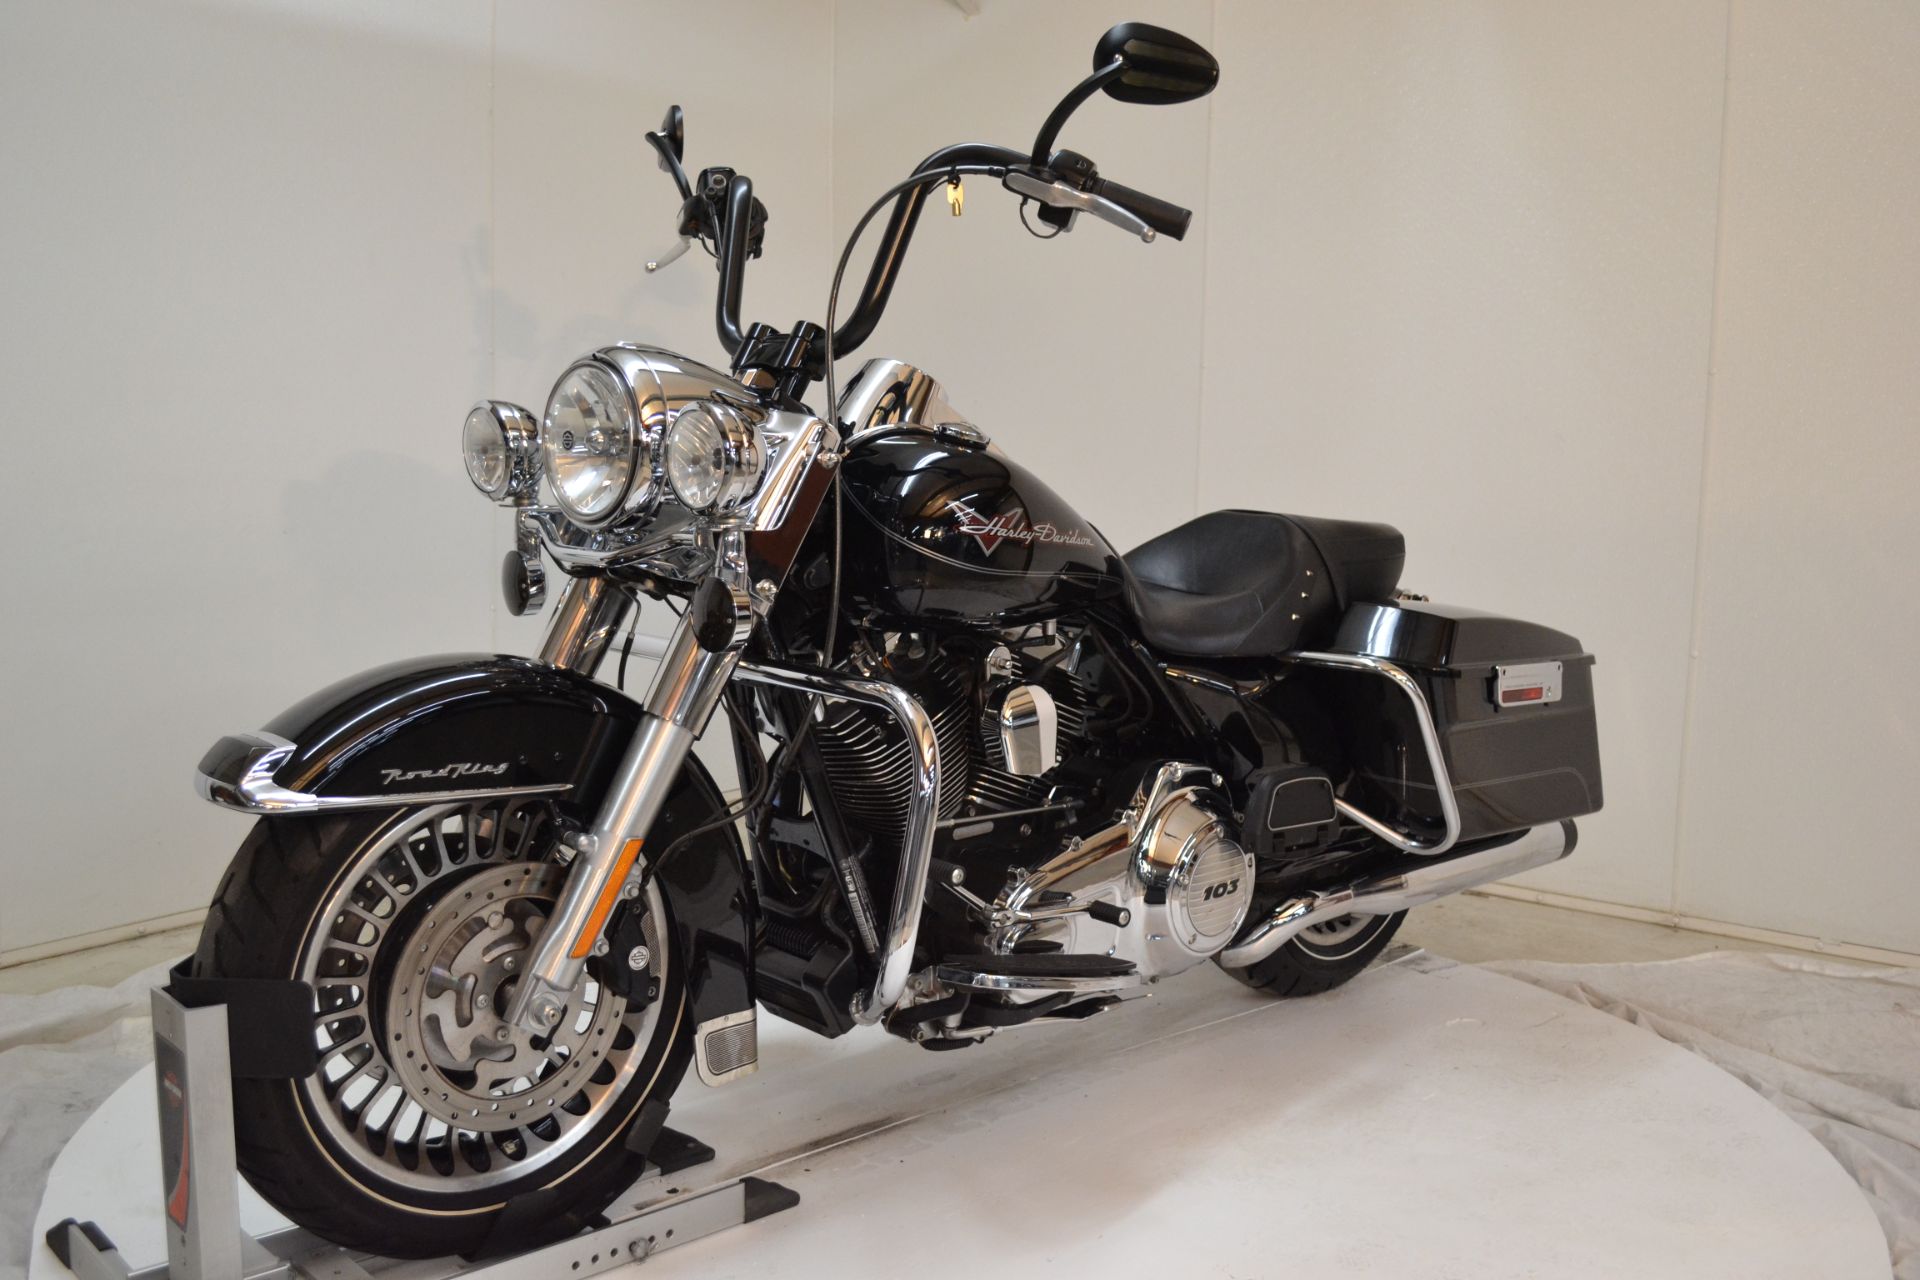 2013 Harley-Davidson Road King® in Pittsfield, Massachusetts - Photo 8